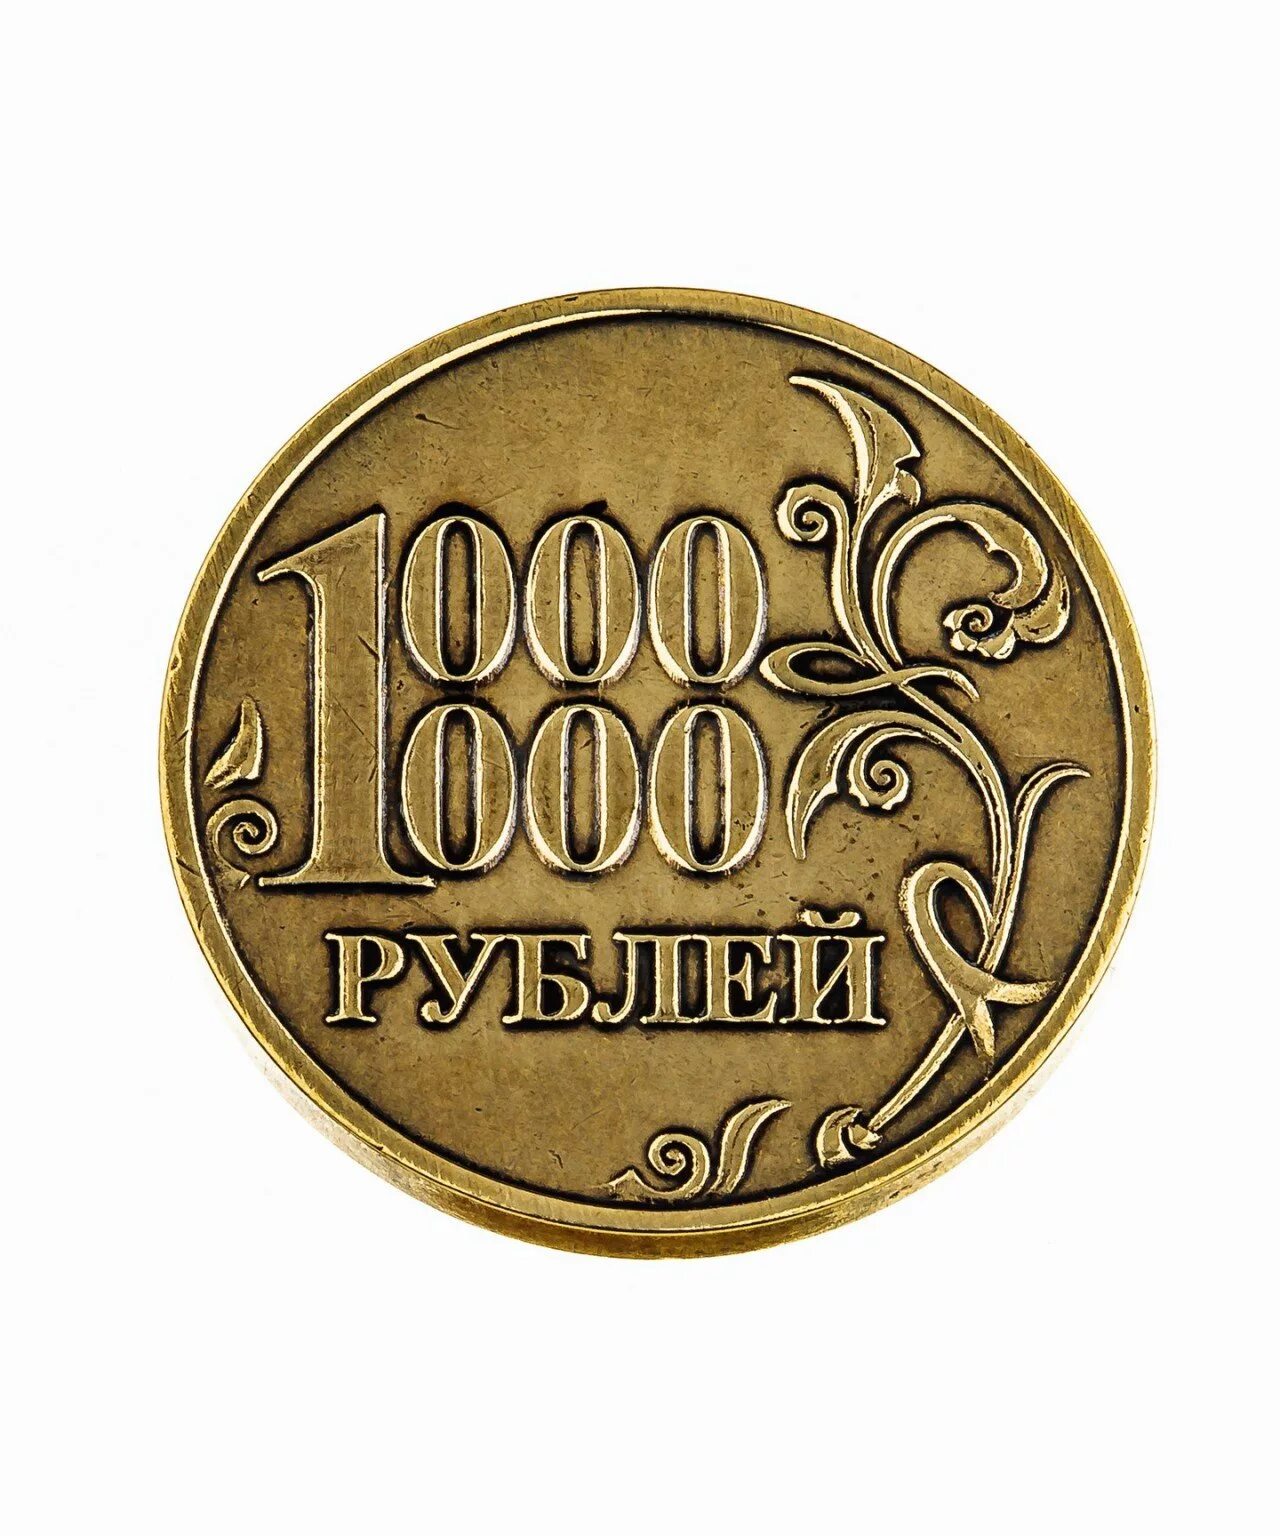 1000000 рублей в месяц. Монета миллион рублей. Монета 1 милион рубле й. Сонета 1 миллион рублей. Монета 1 миллион рублей.